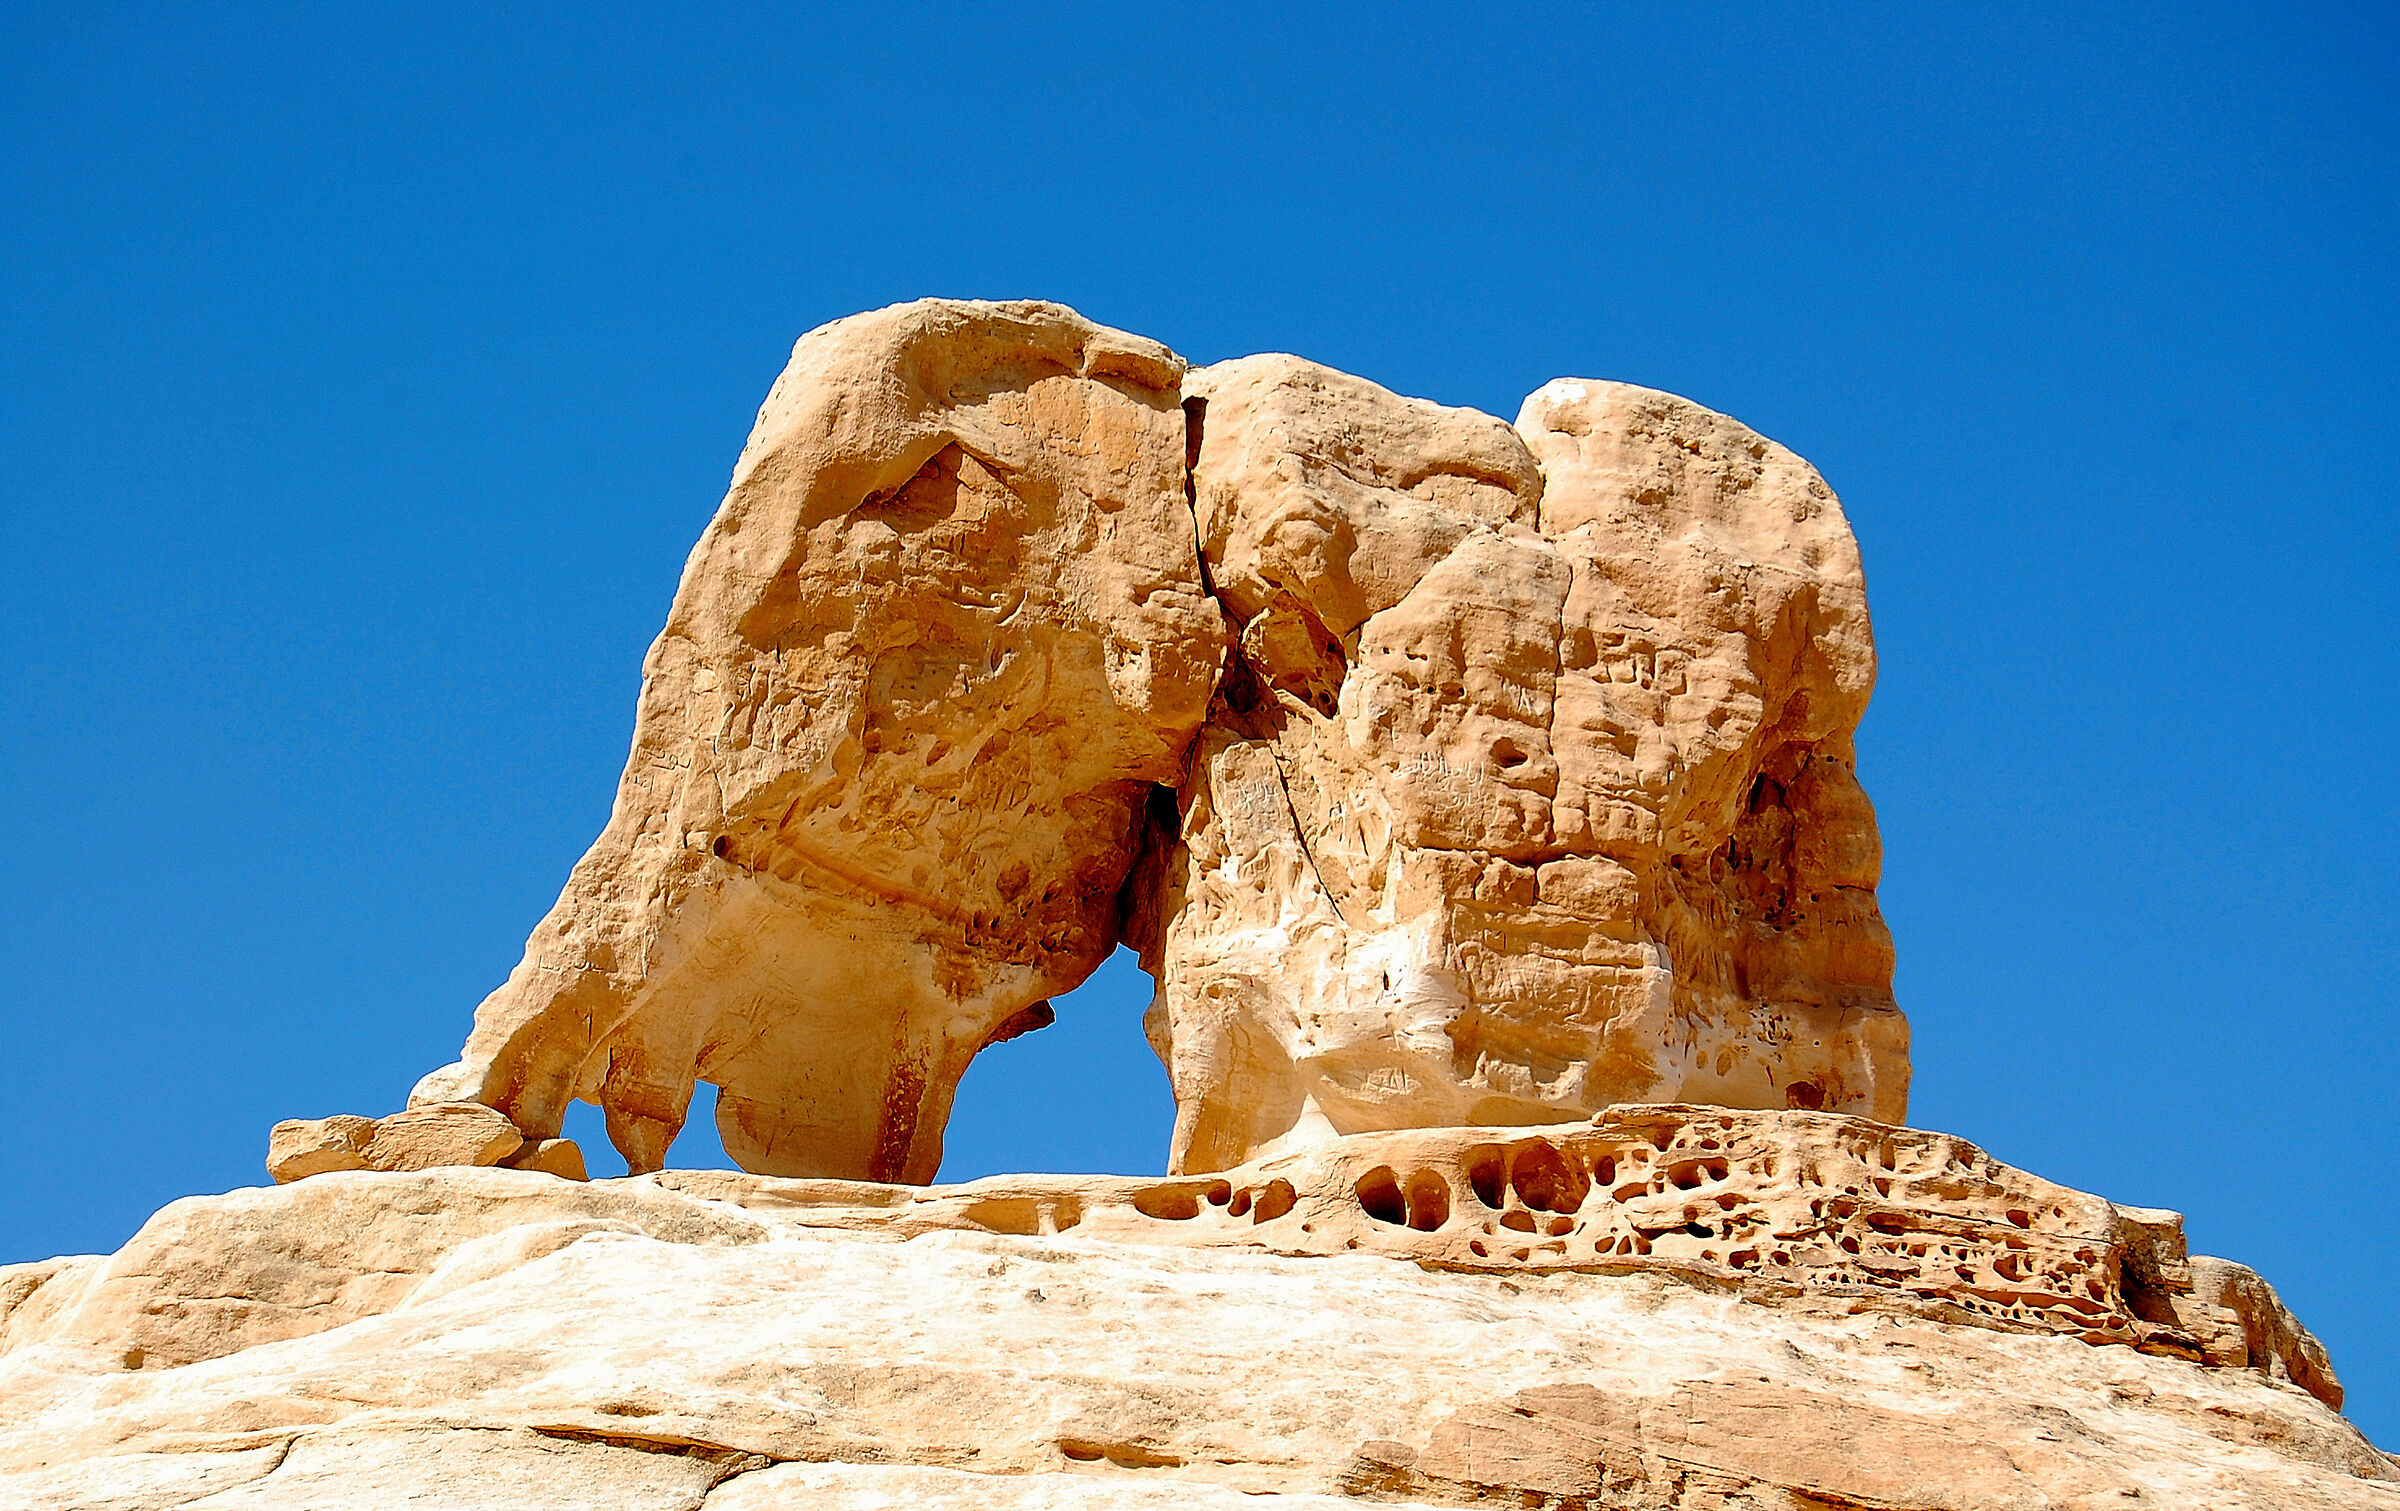 Jordan: the stone elephant...